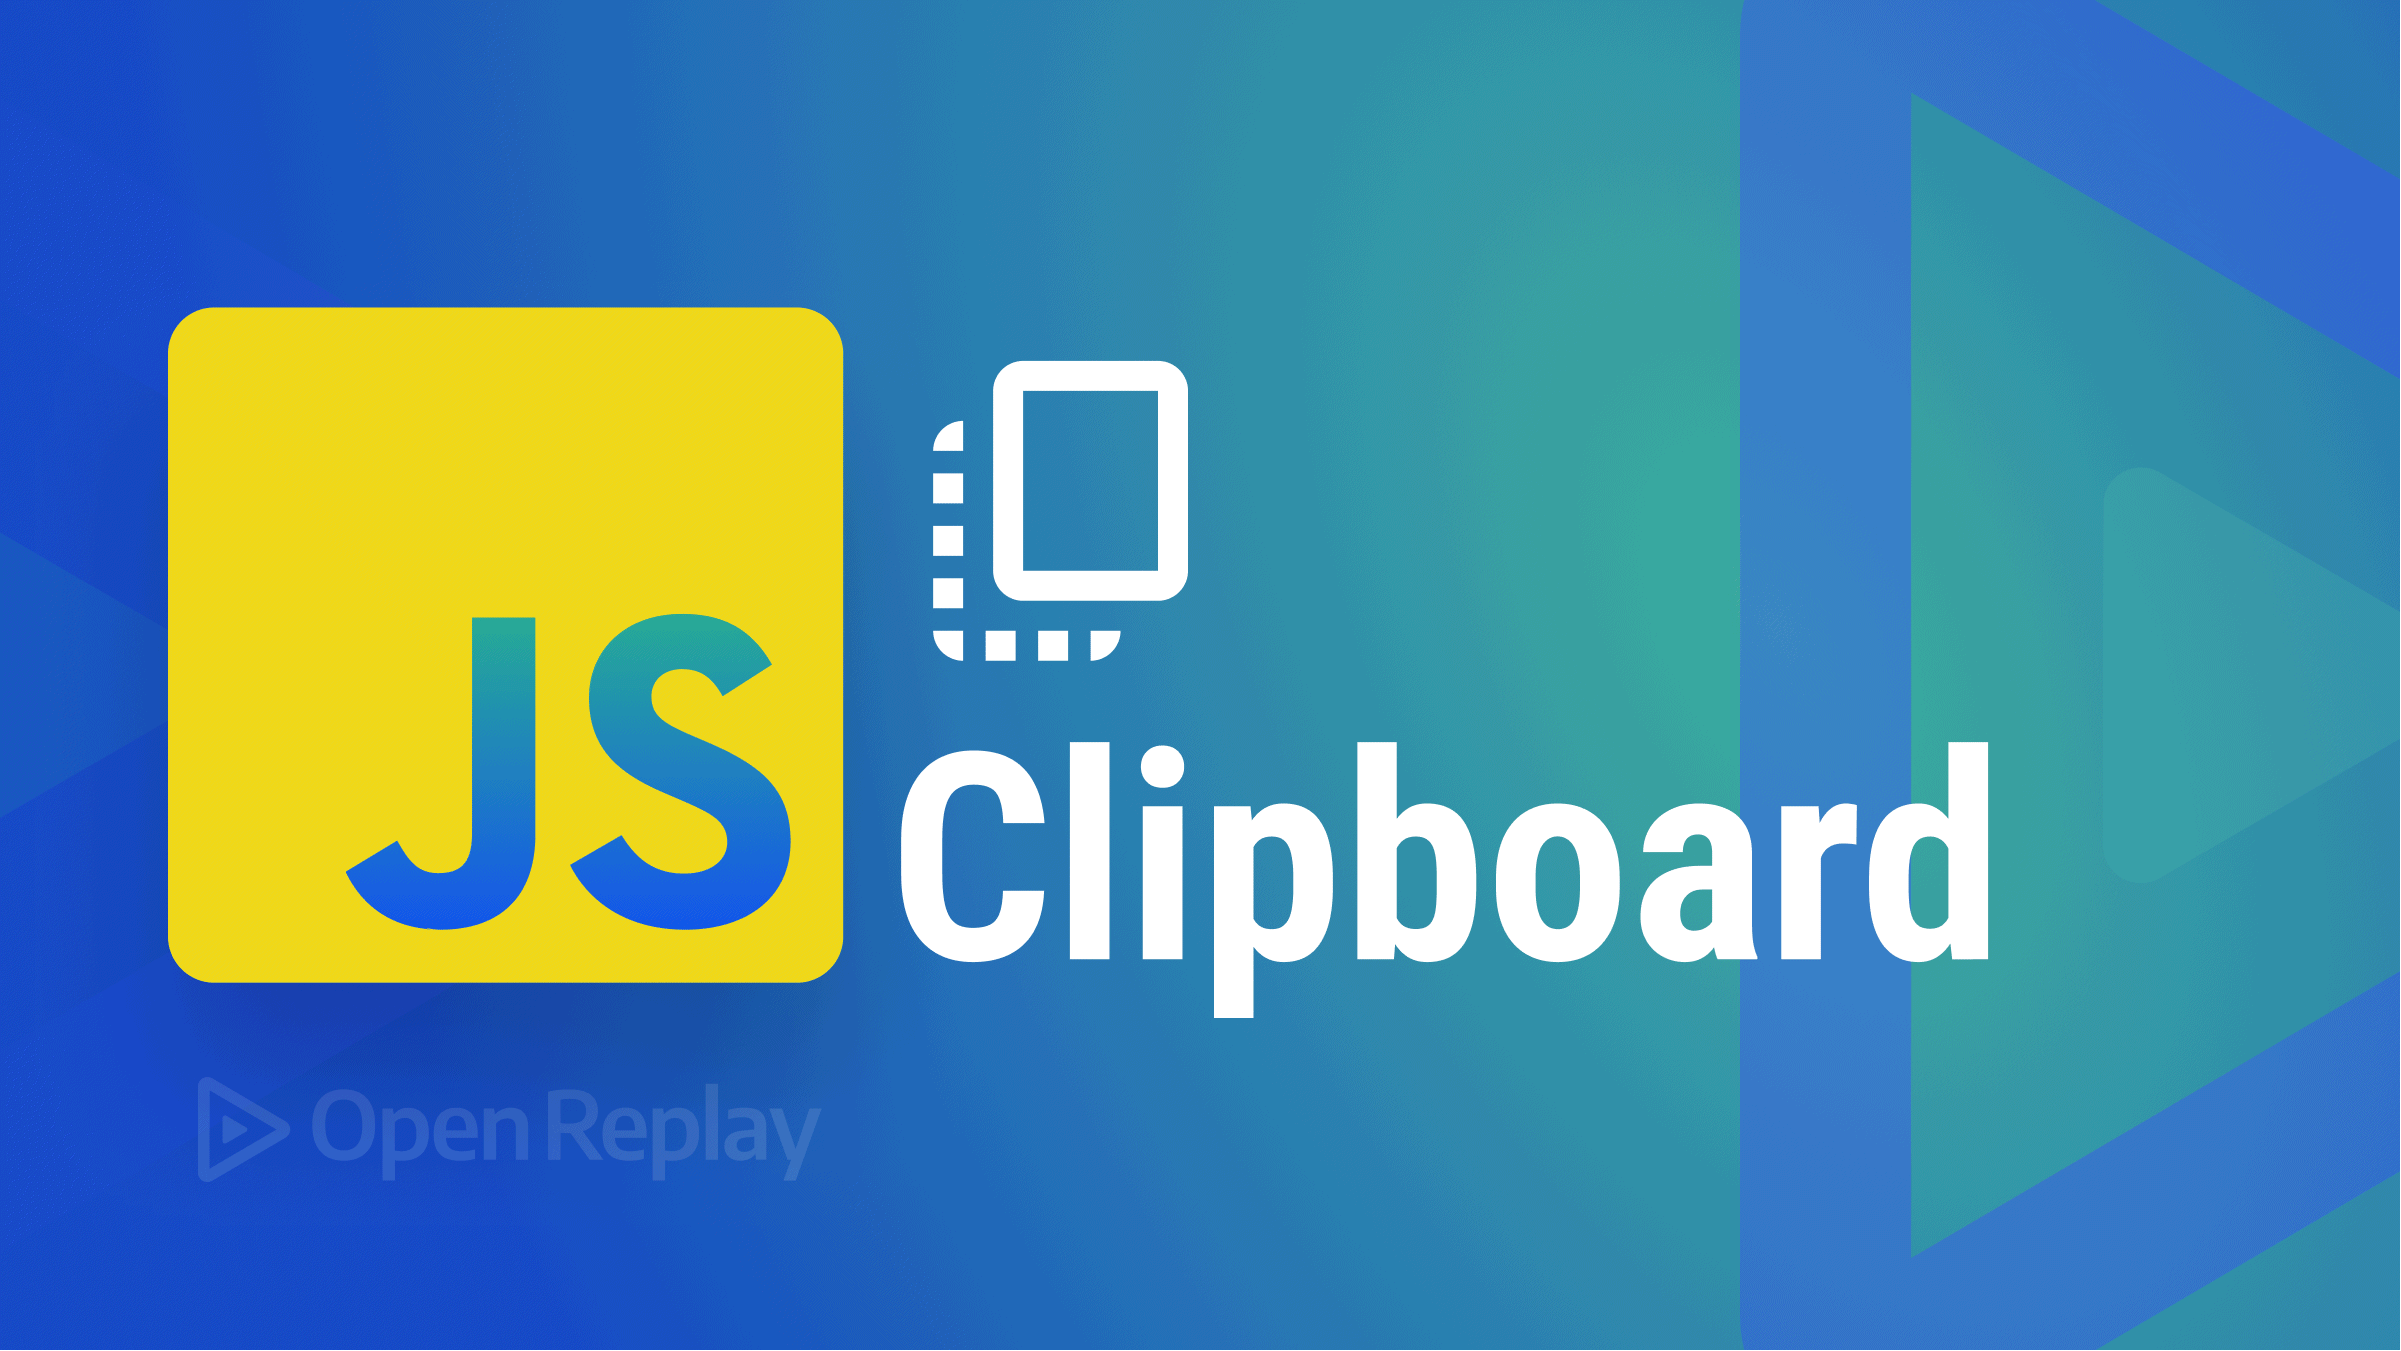 Using the JavaScript Clipboard API